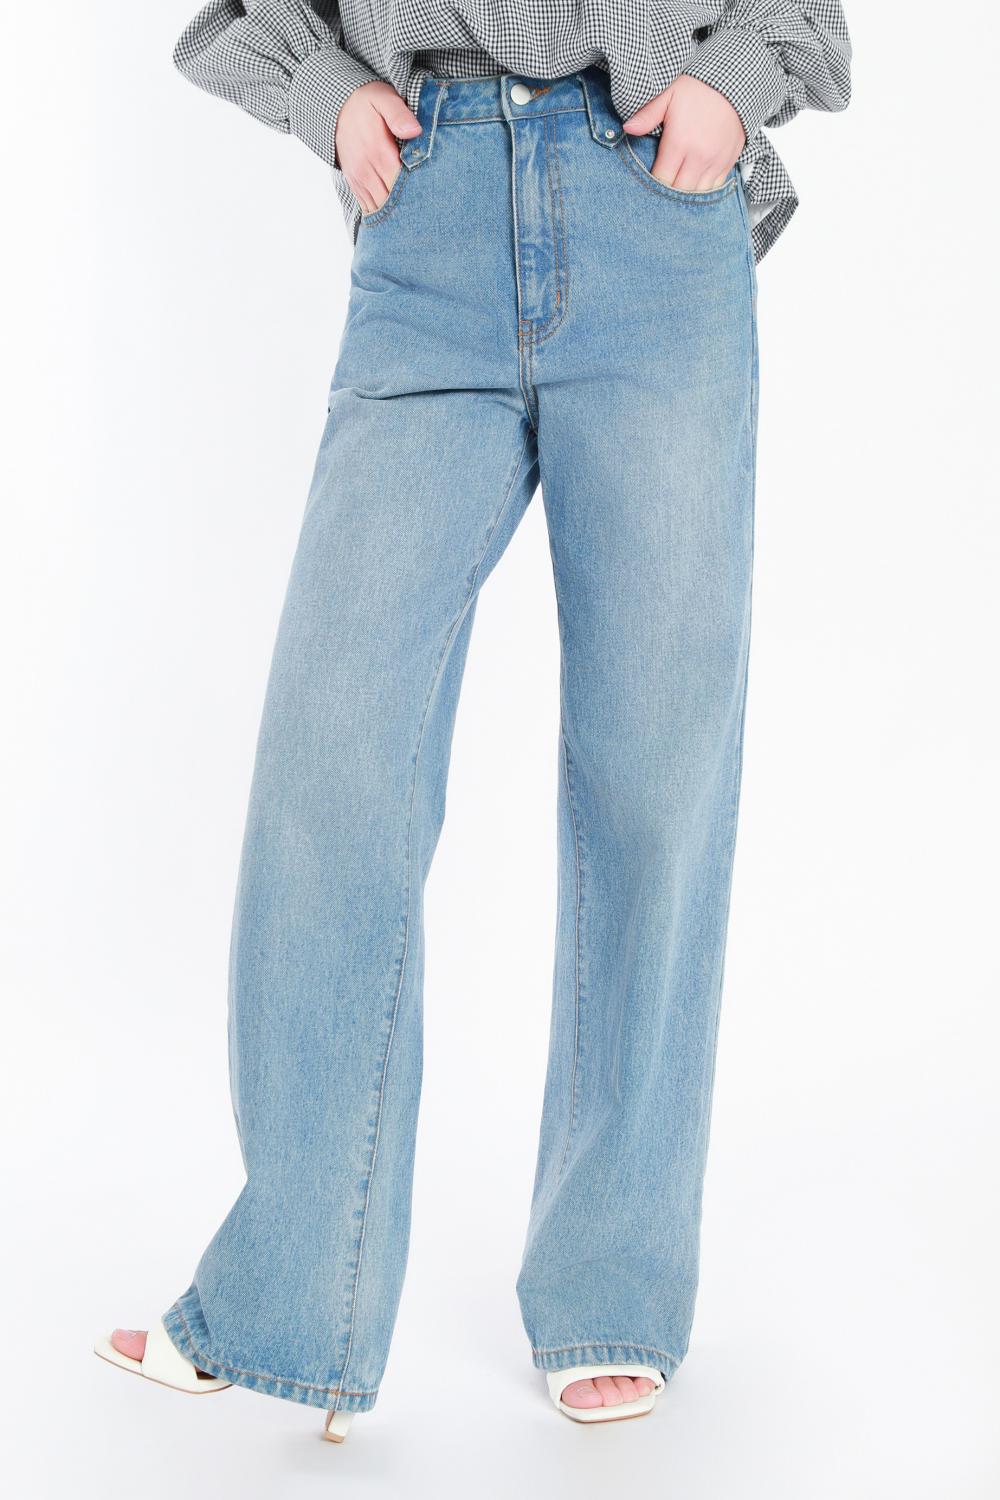 Seluar jeans langsing biru ringan